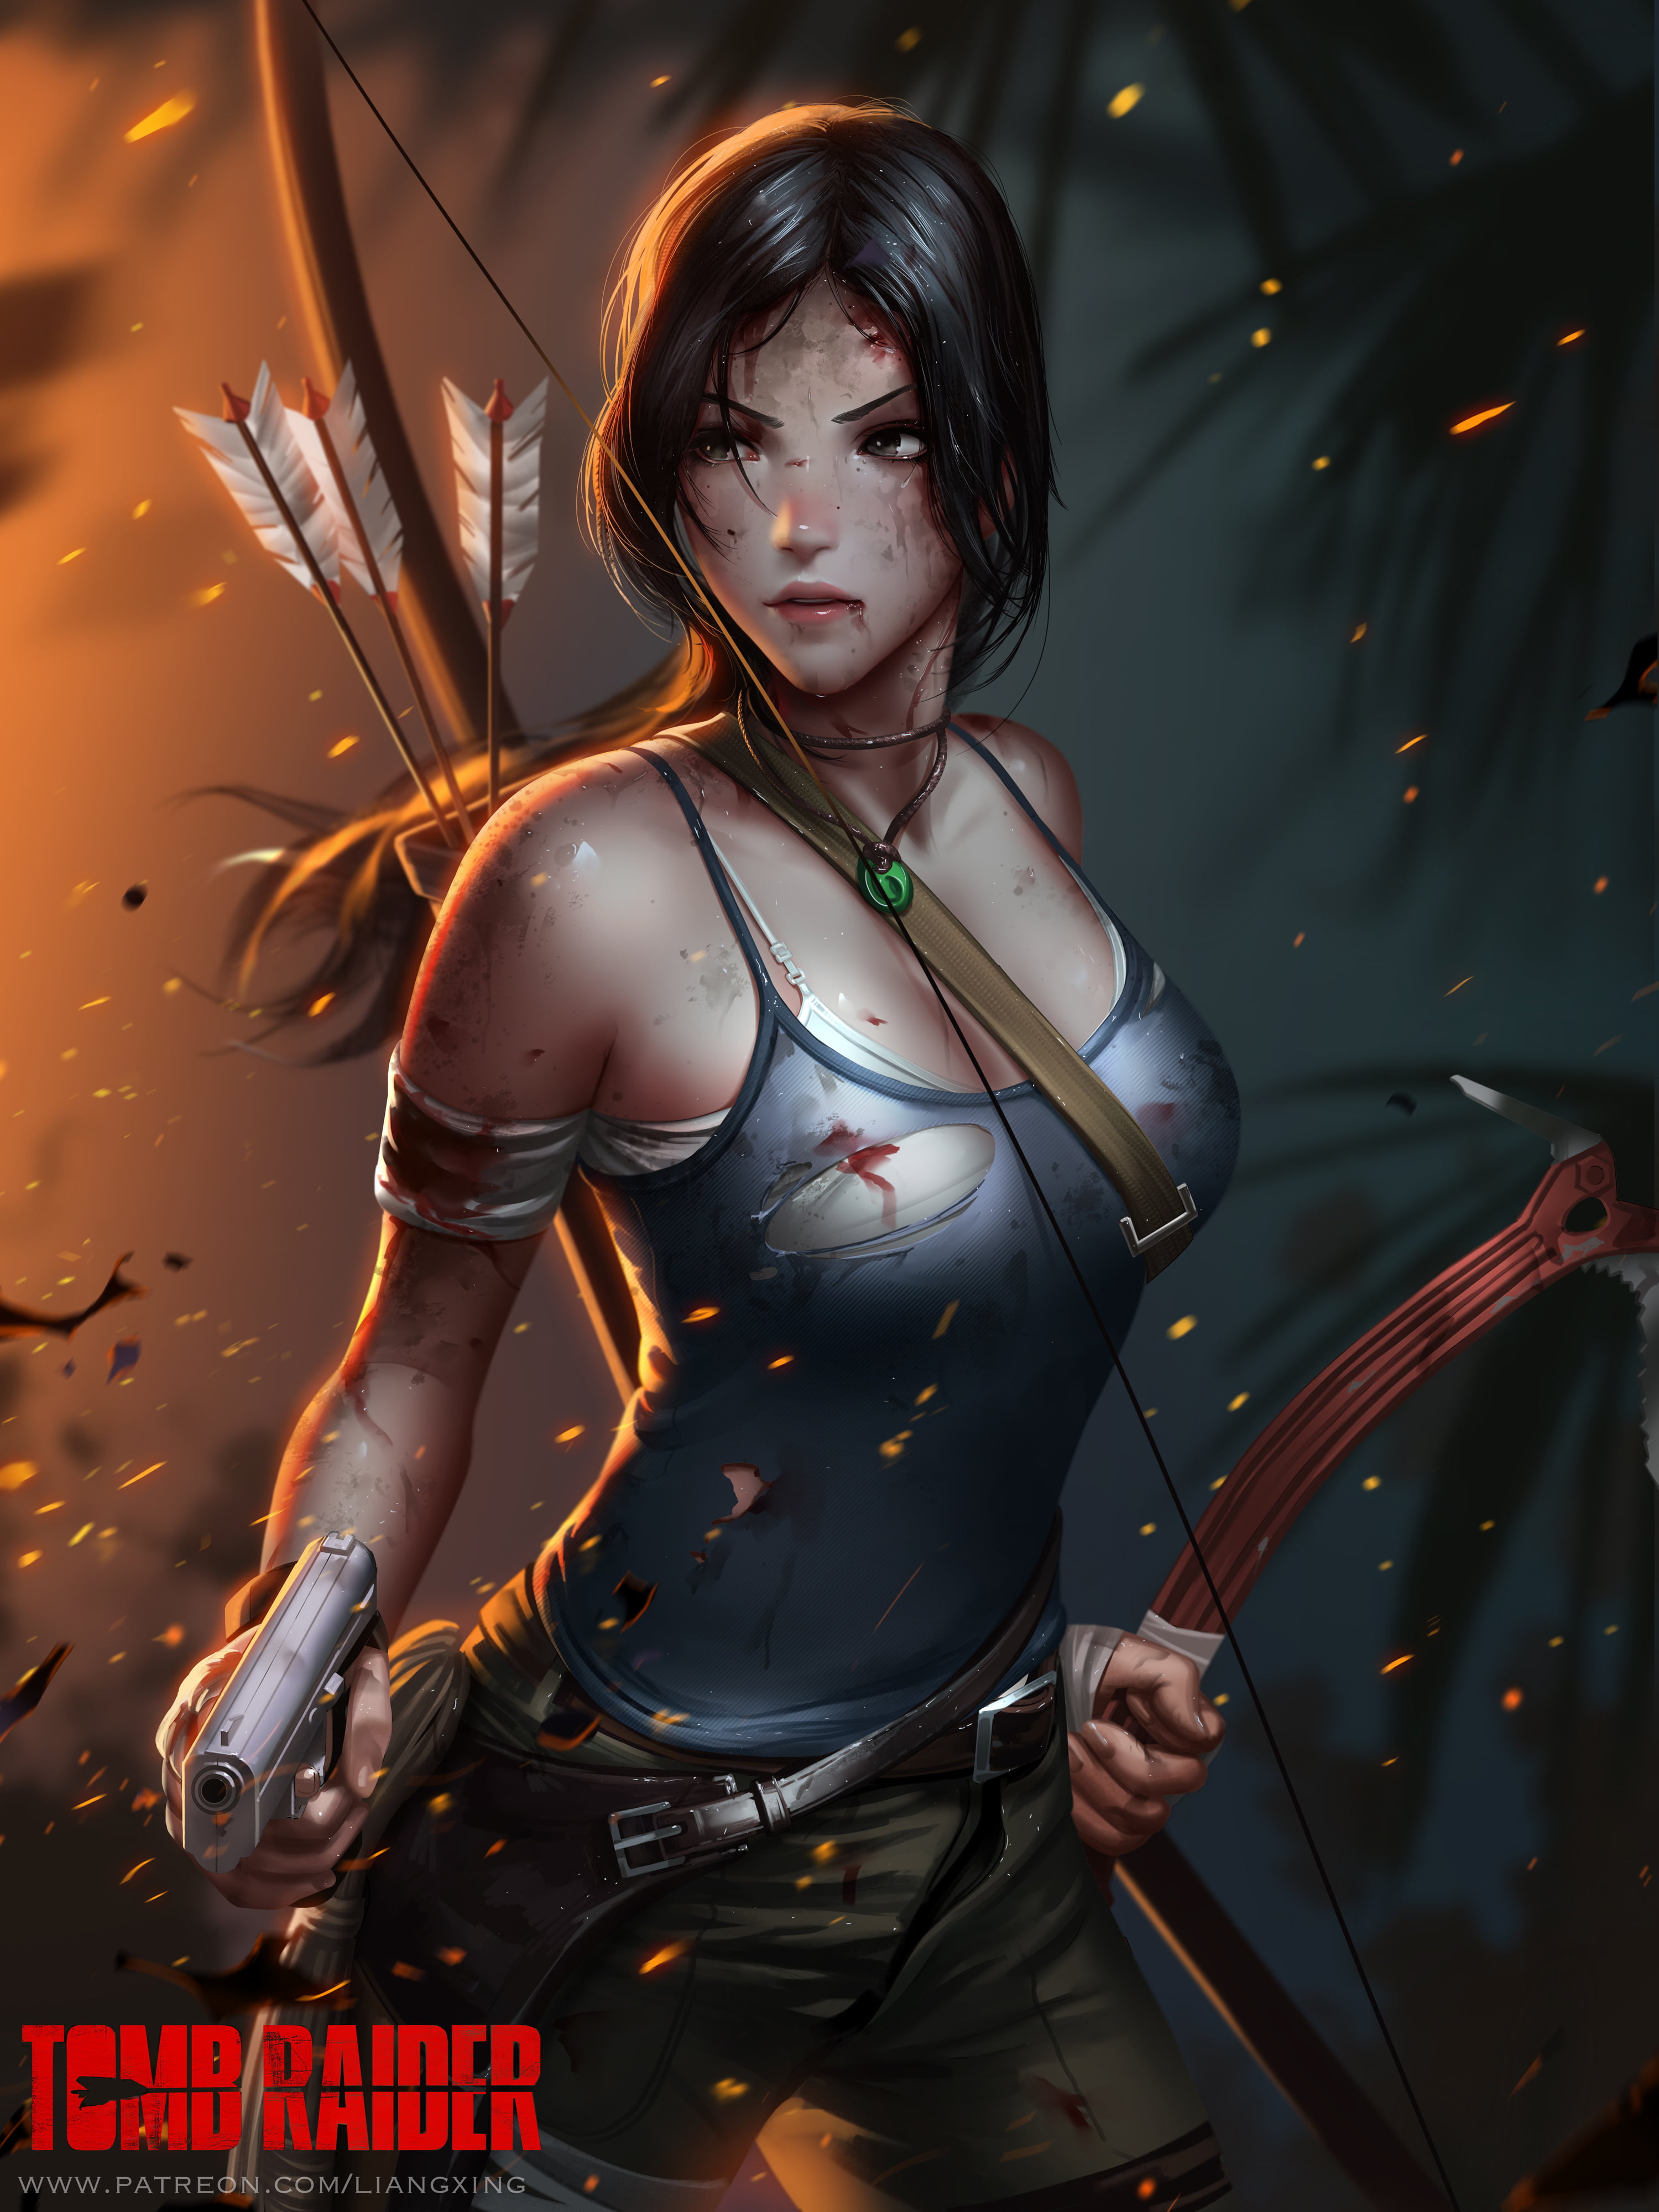 Tomb Raider game application wallpaper, digital art, artwork